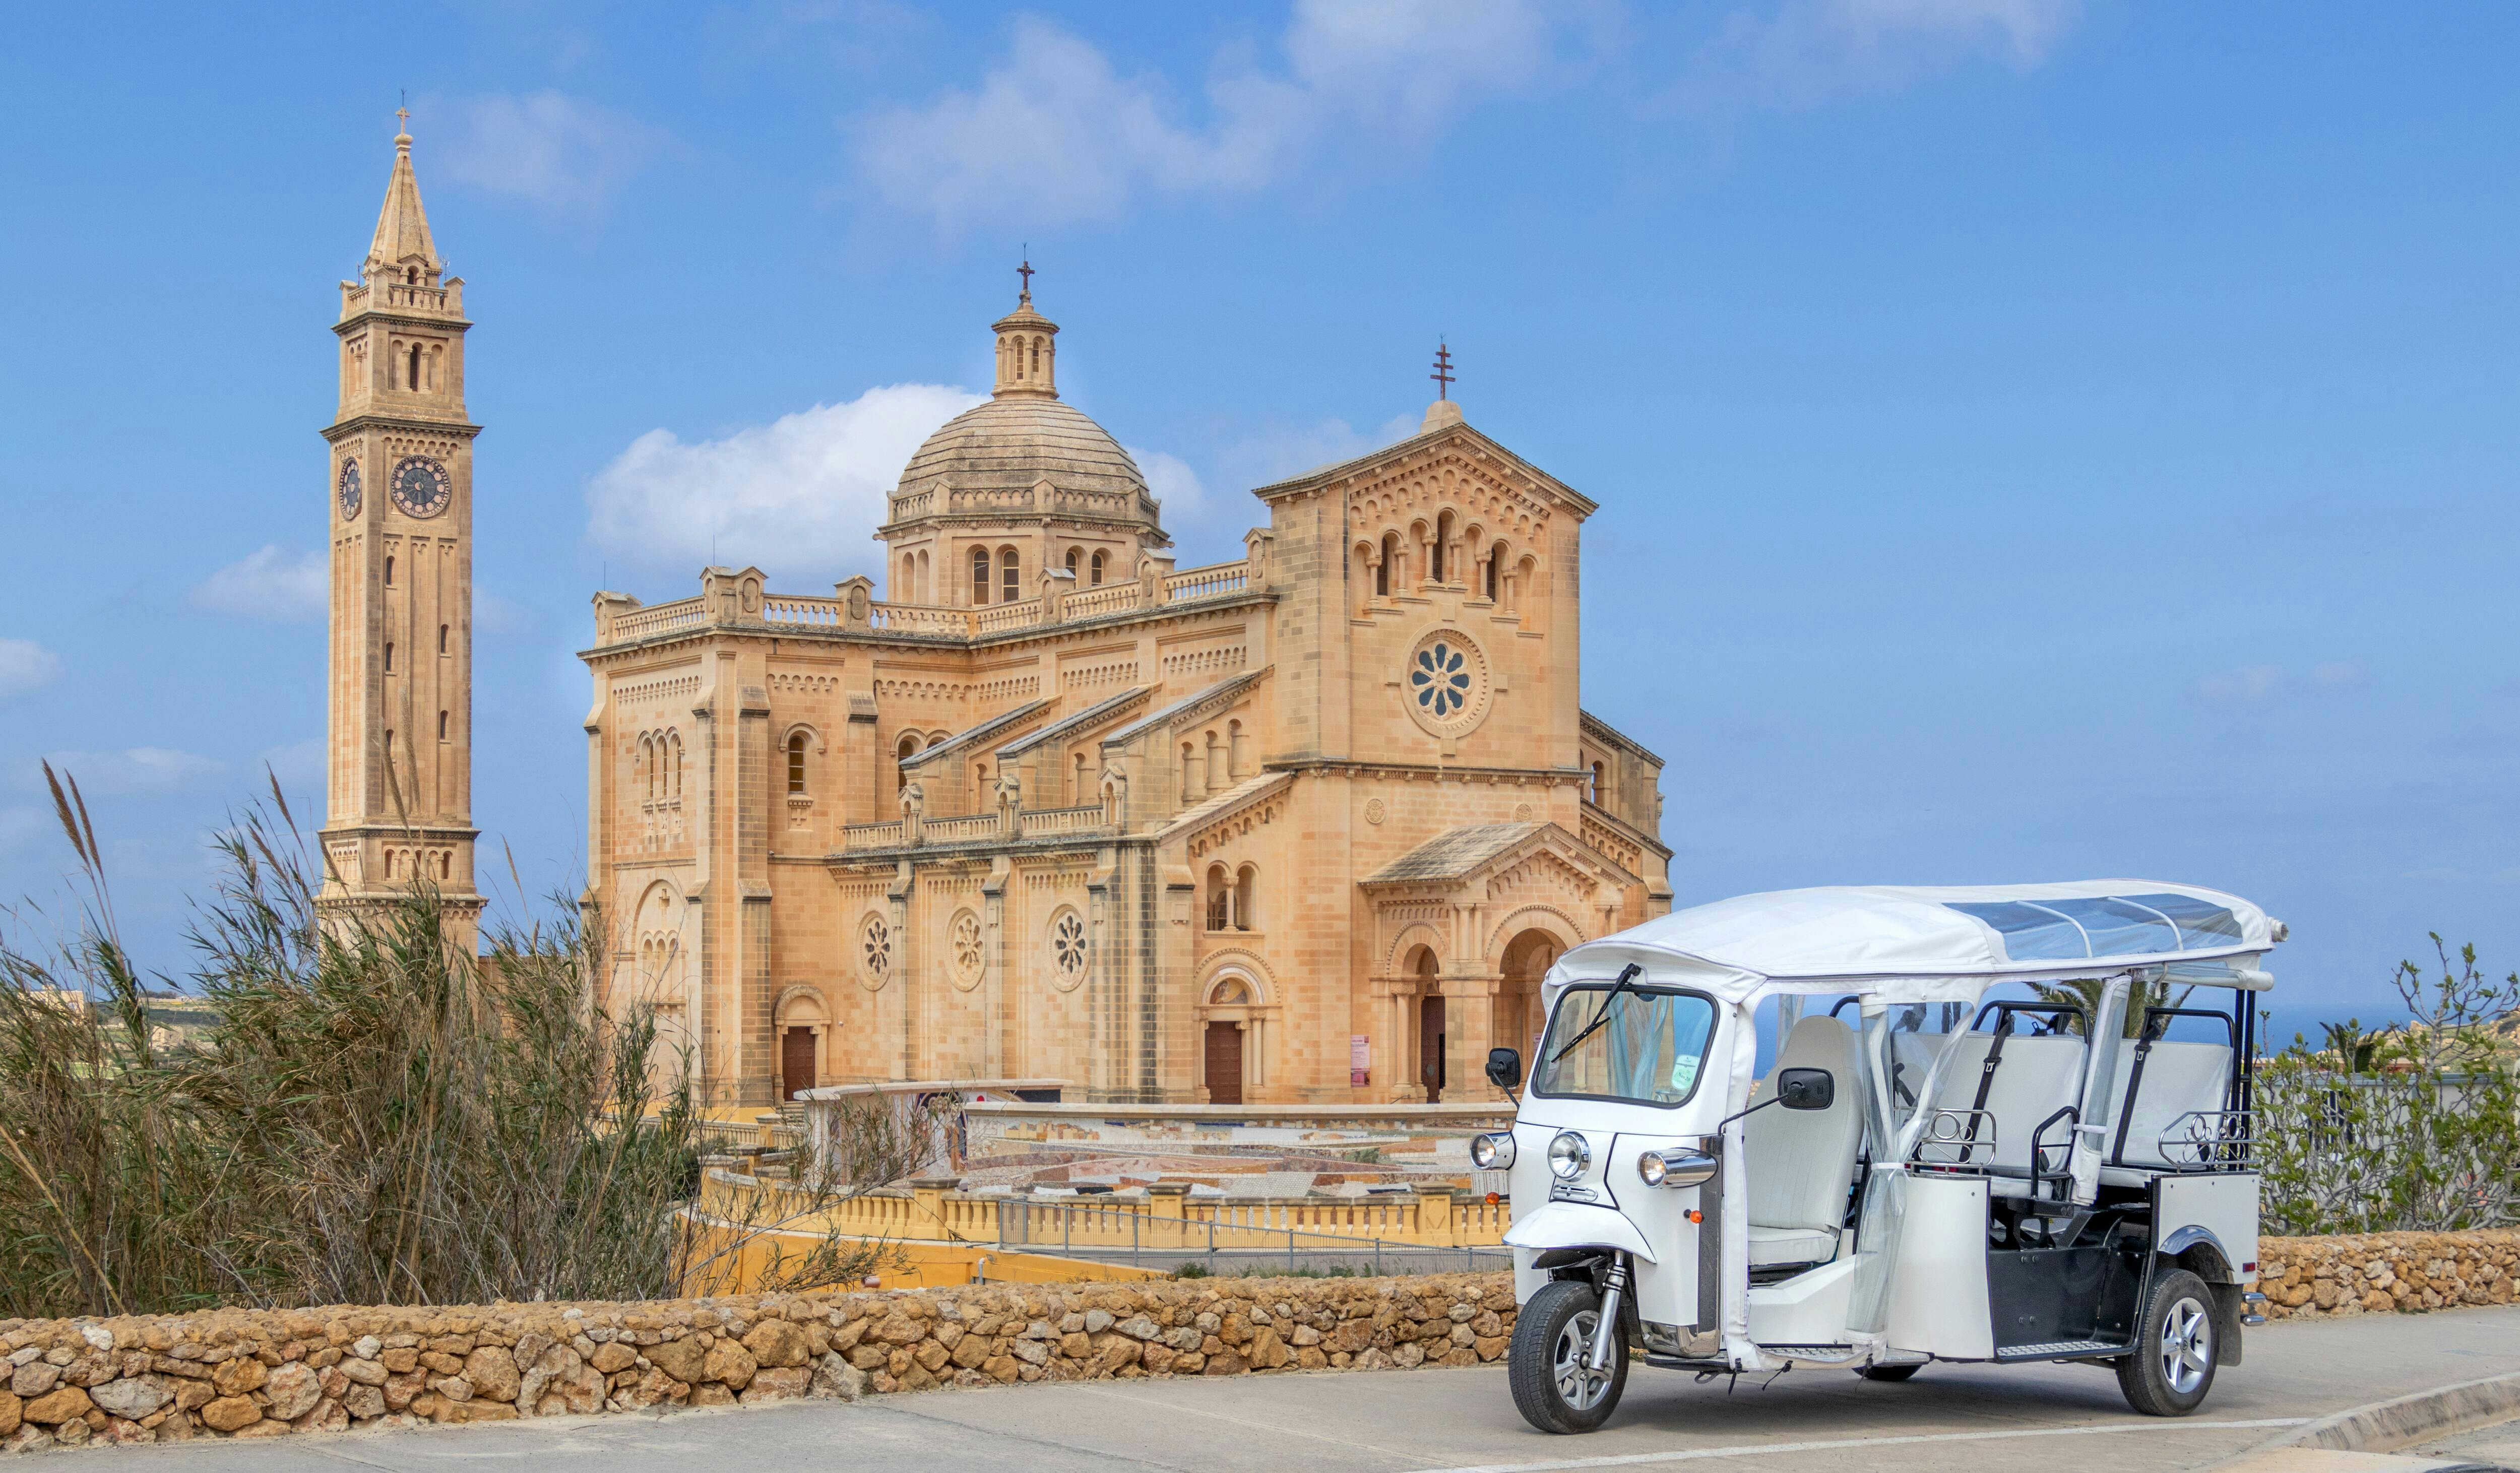 Kleingruppentour durch Gozo mit dem Tuk-Tuk